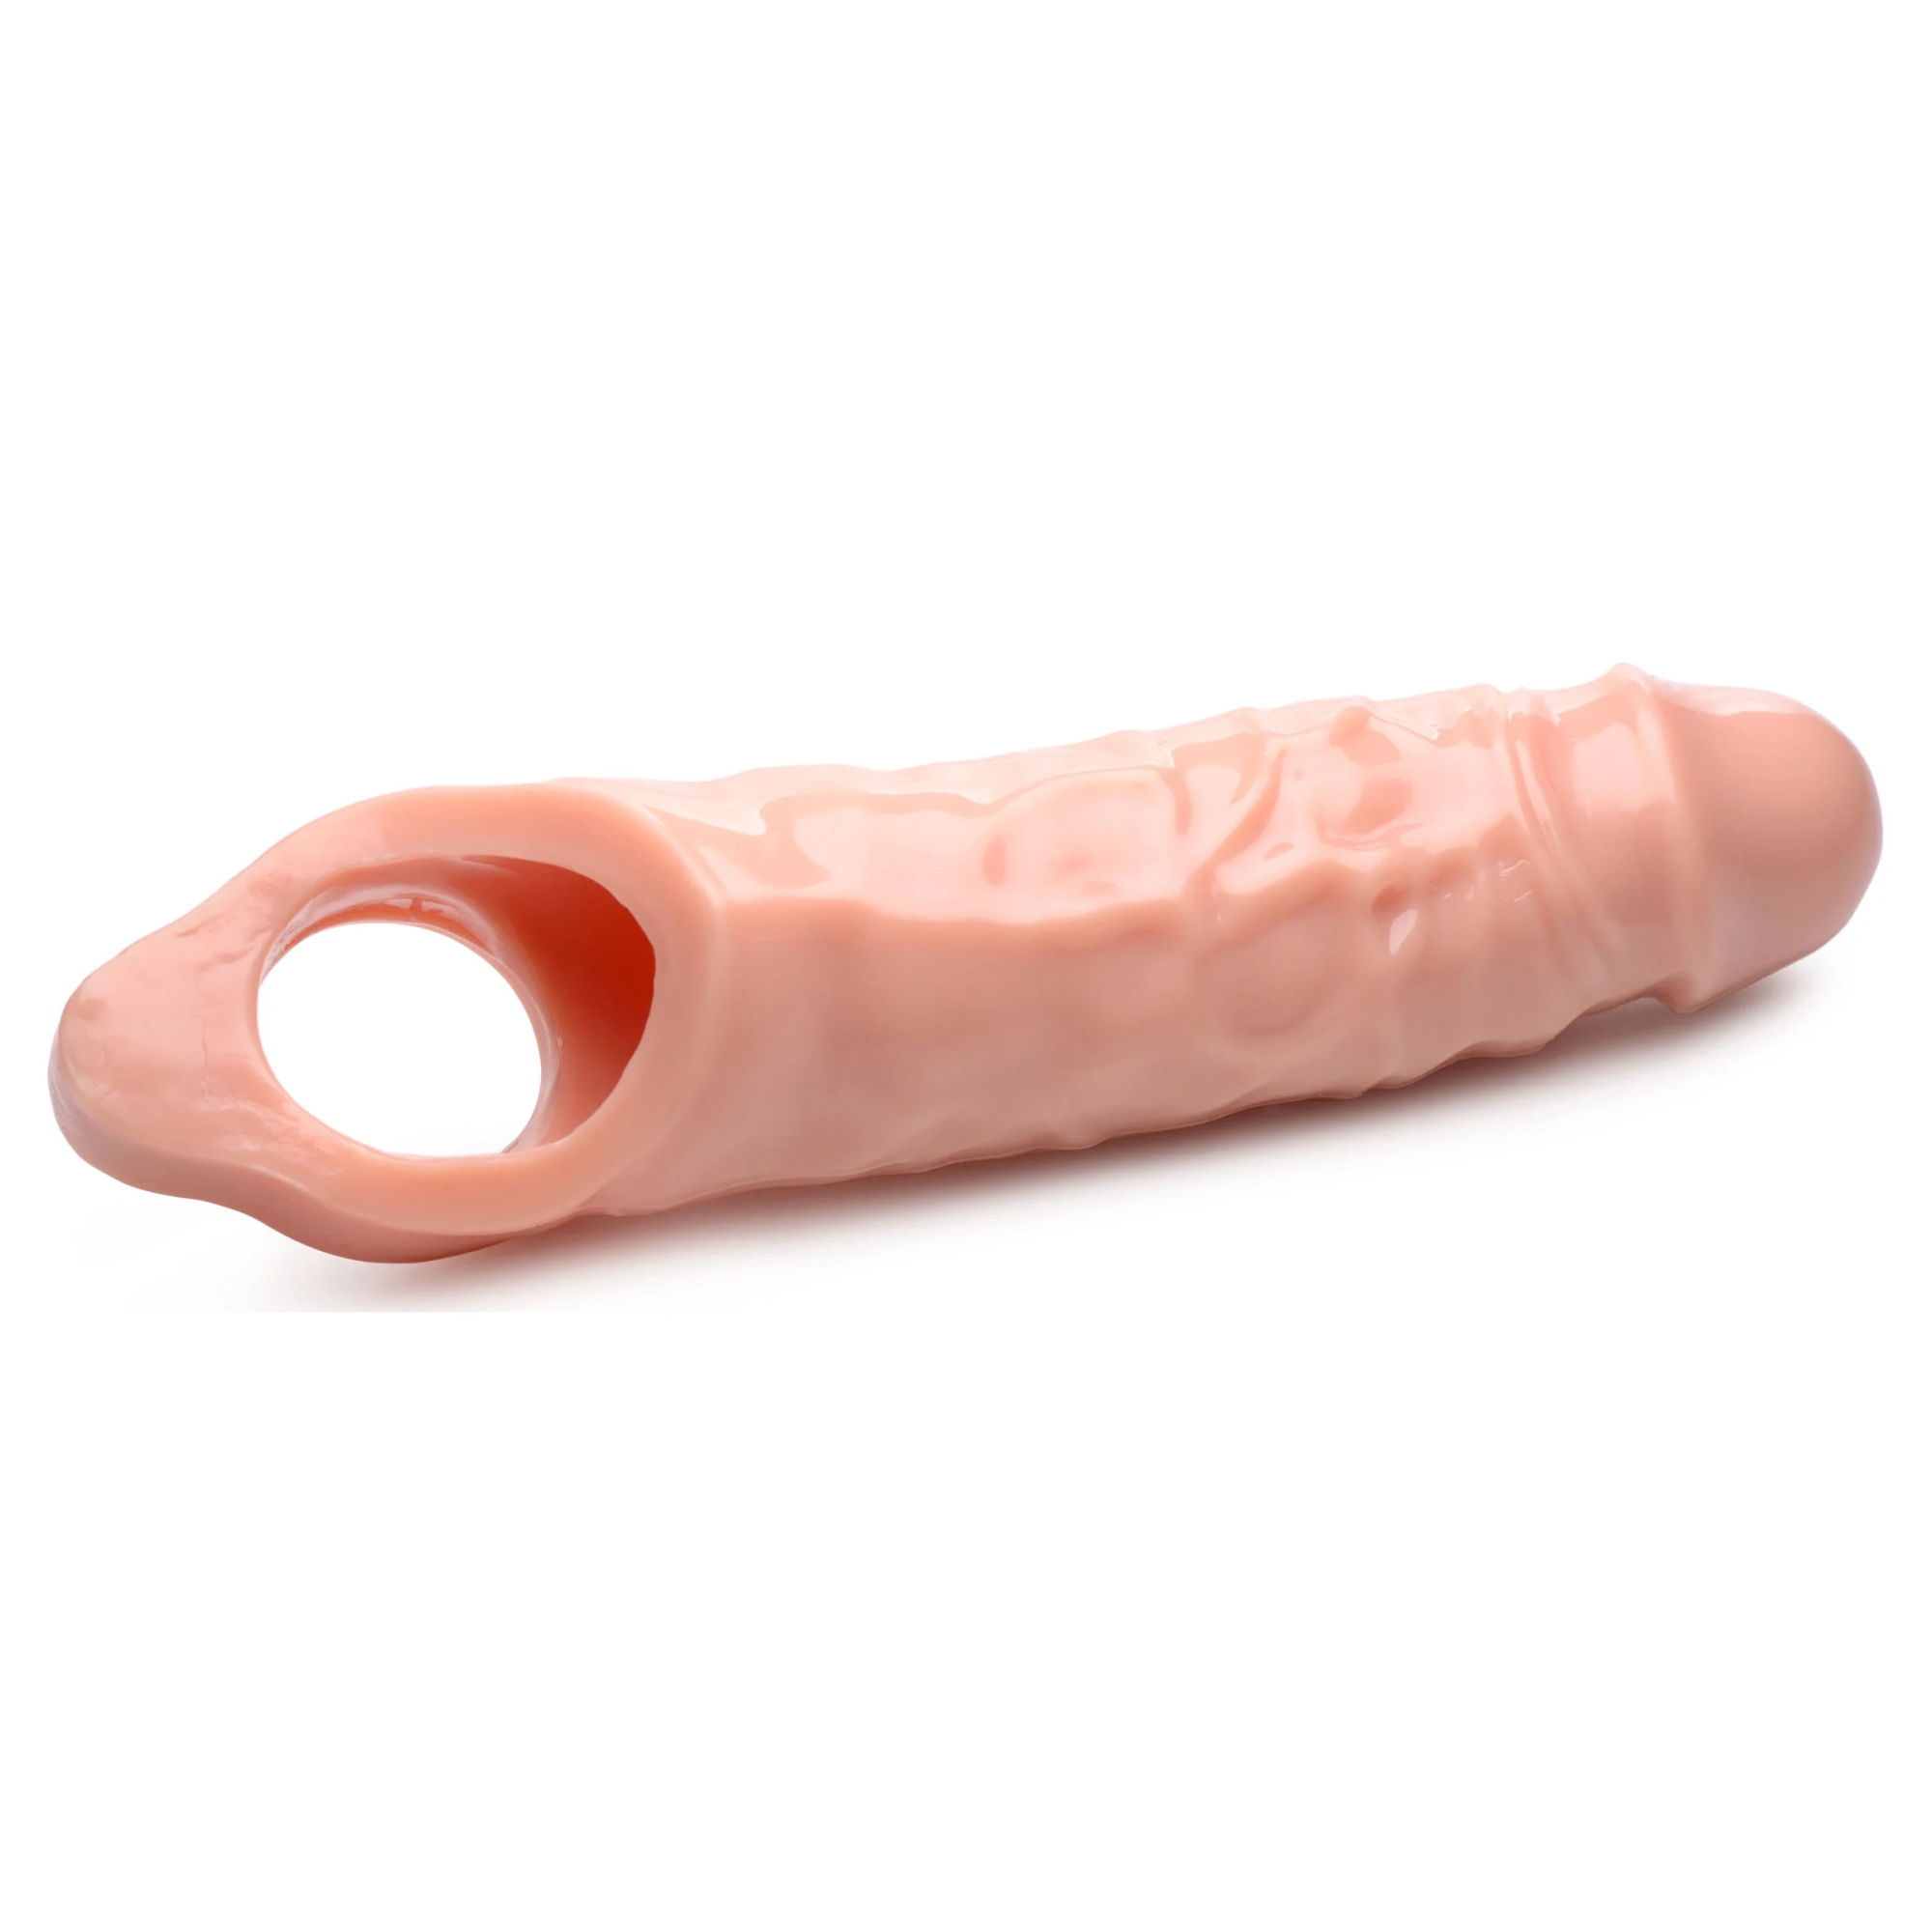 Size Matters Really Ample Penis Enhancer - насадка для увеличения члена, 16.5х5.1 см (телесный)